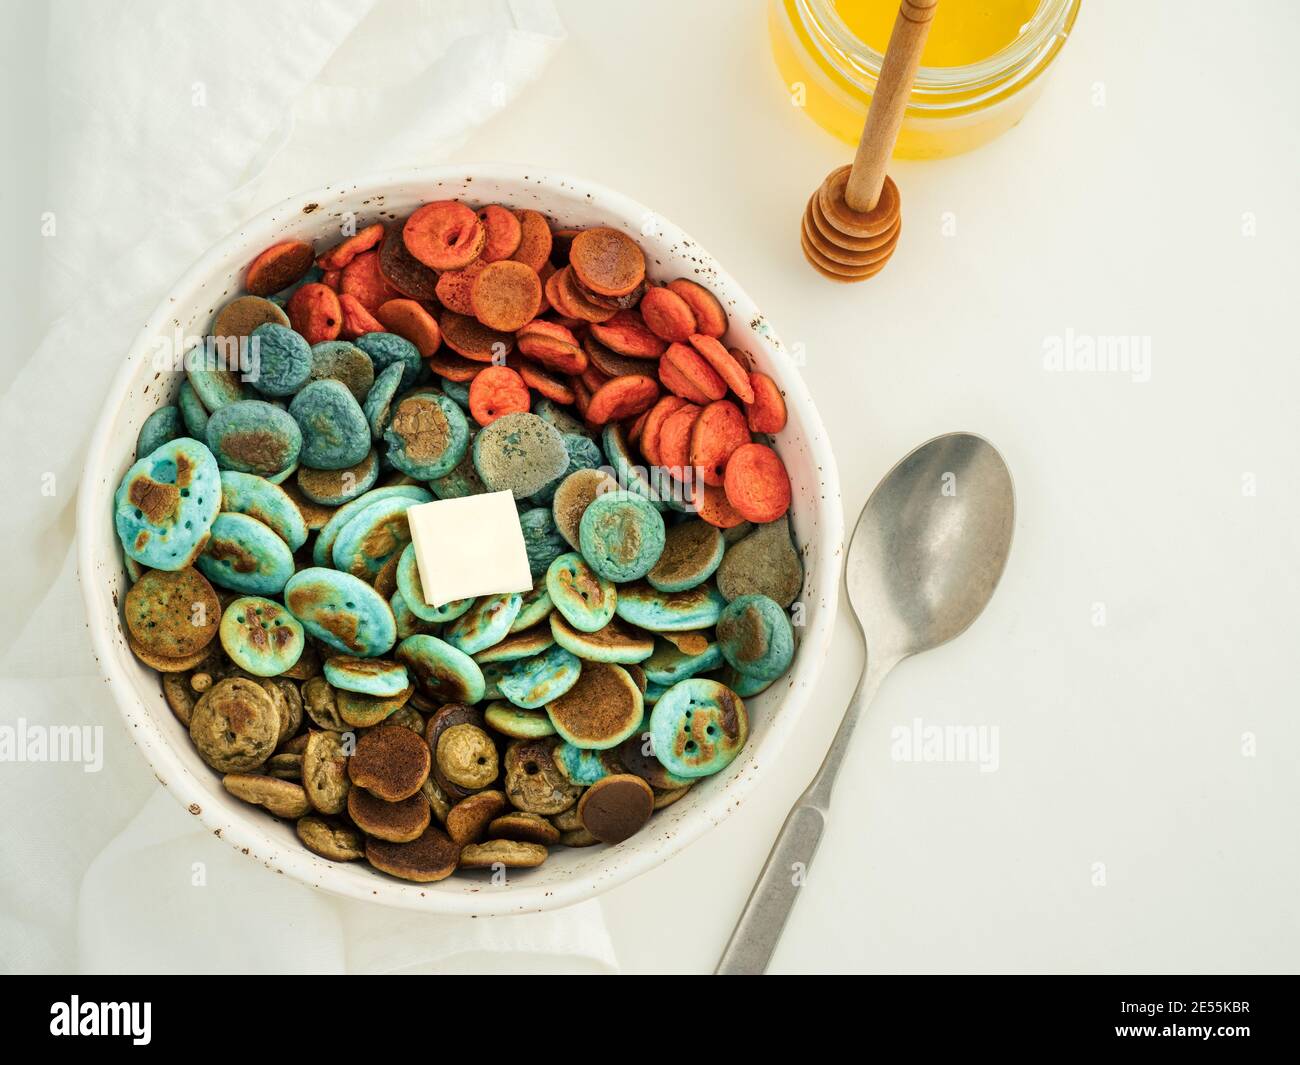 Cibo alla moda - cereali pancake. Un mucchio di mini frittelle di cereali colorate. Minuscoli pancake di colore naturale: Matcha verde, spirulina turchese, piselli blu, frutti rossi Foto Stock